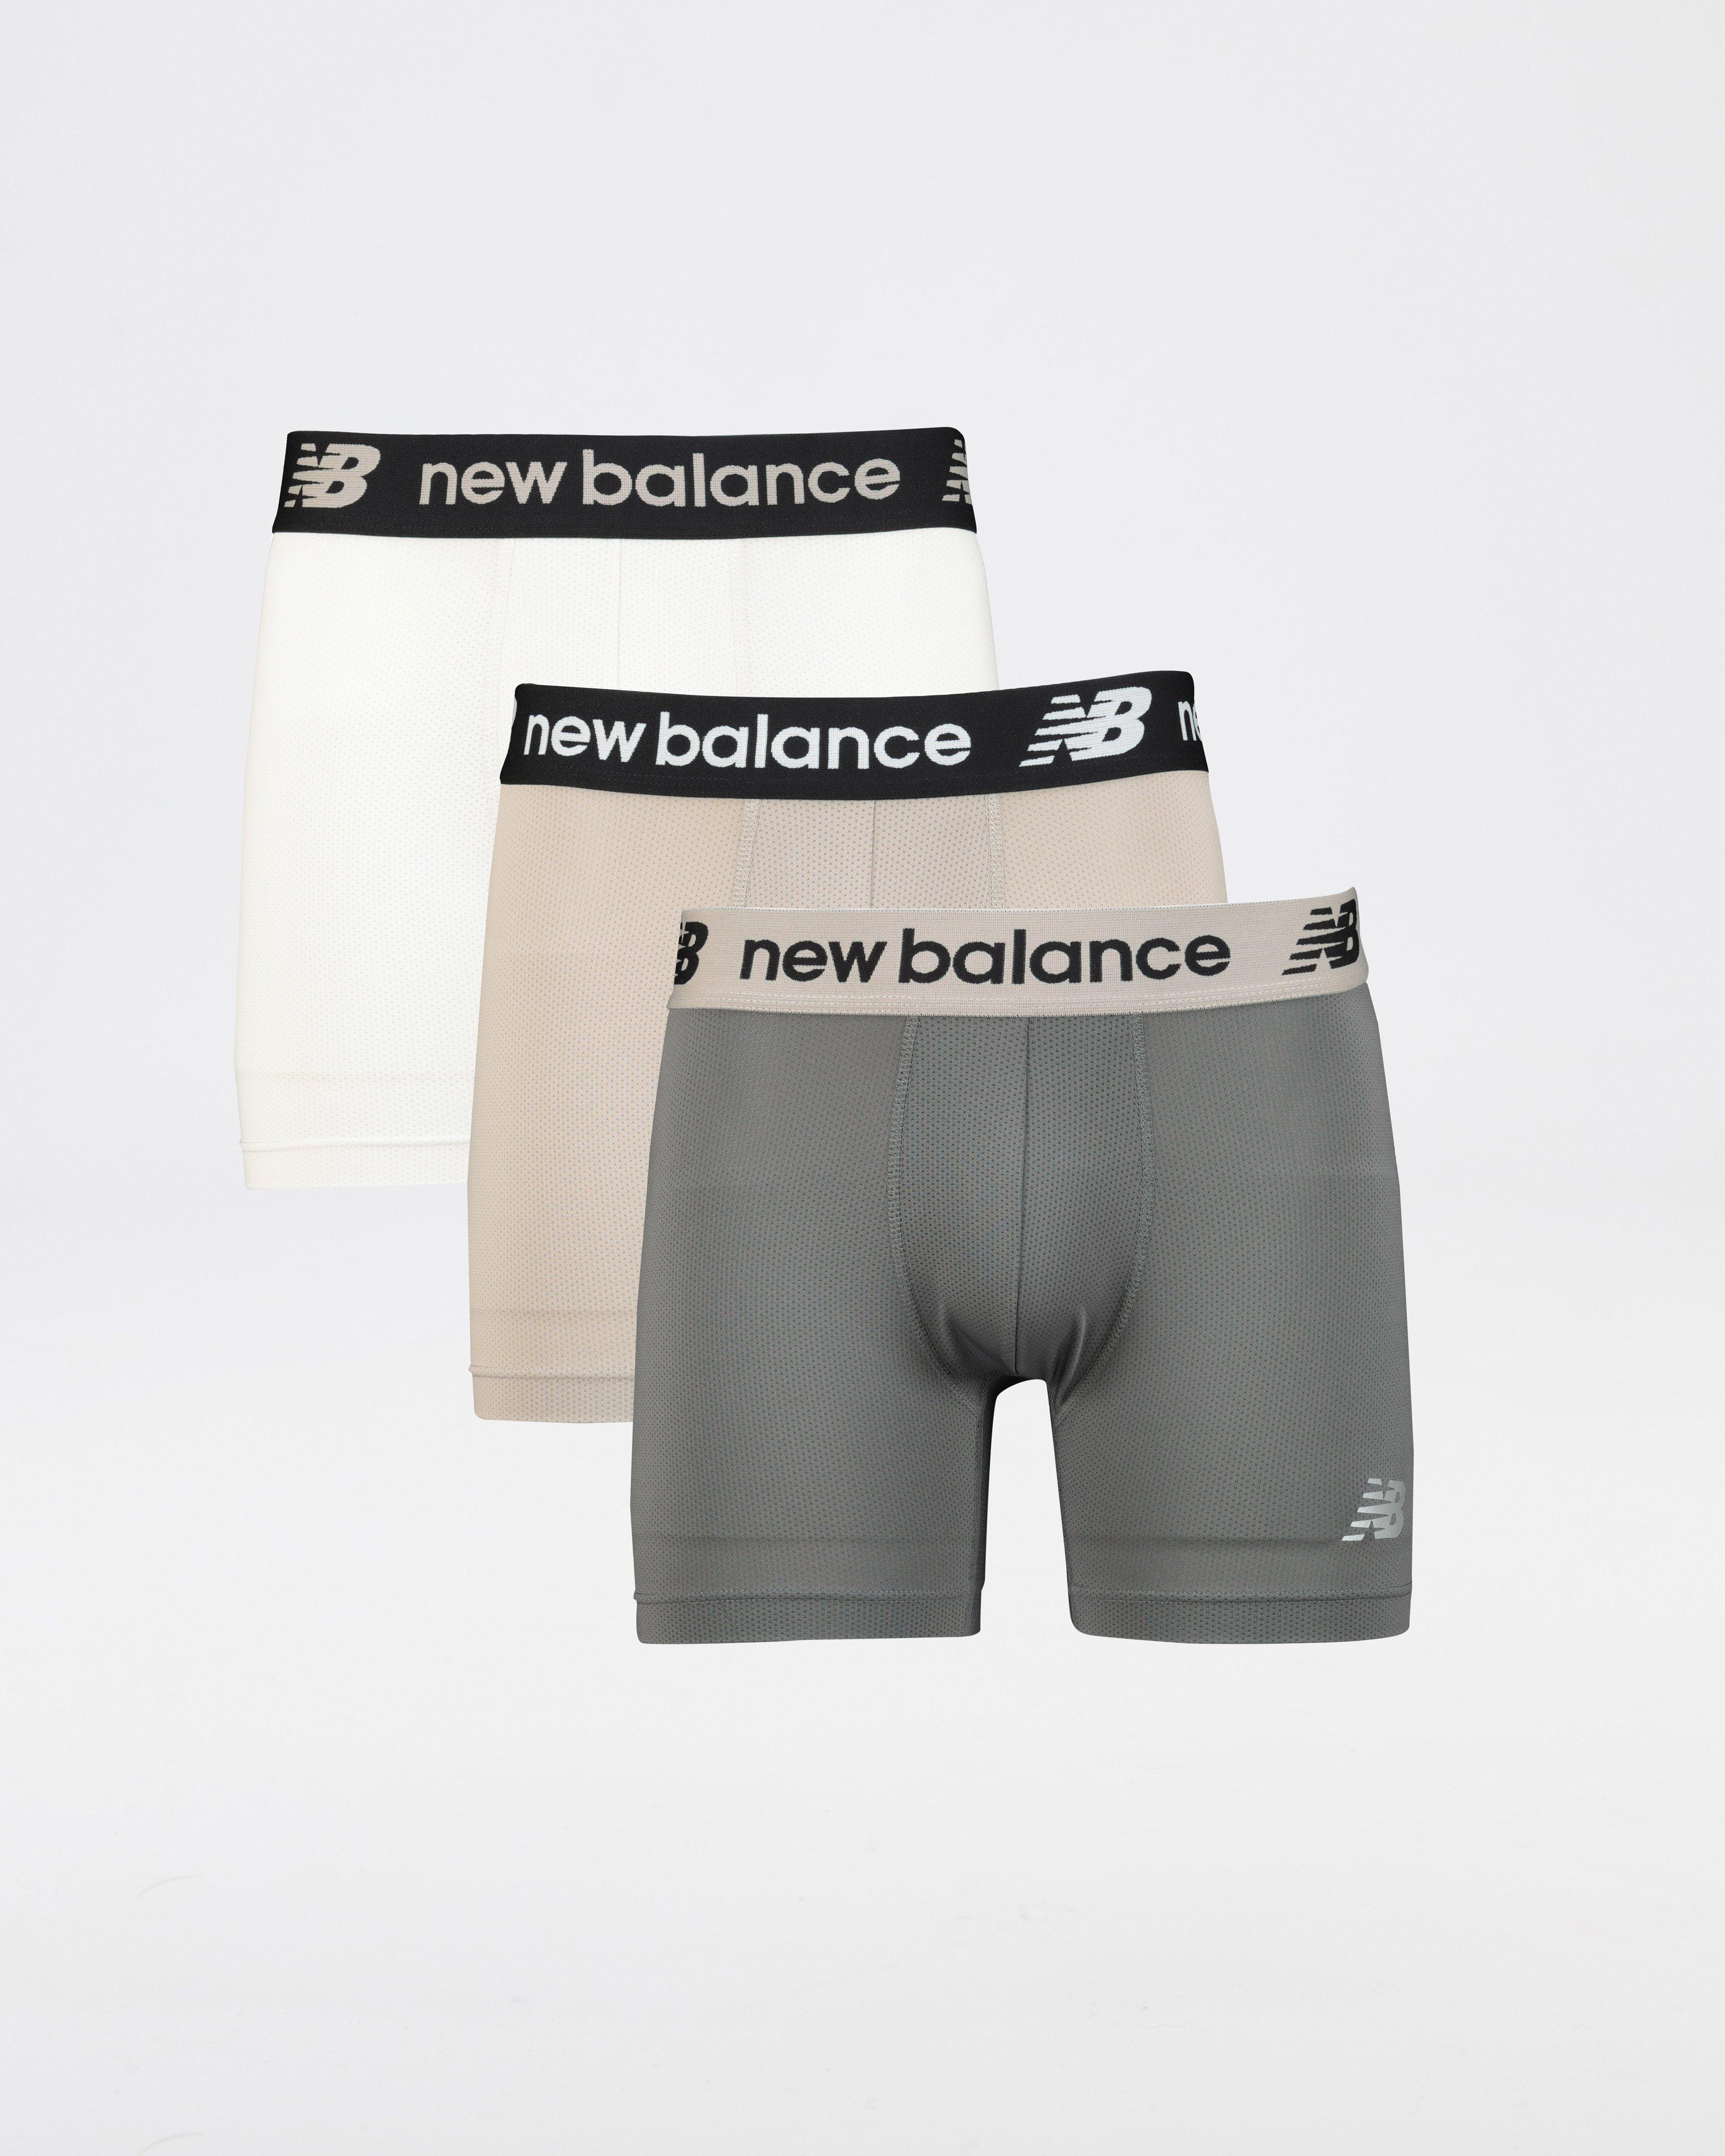 New Balance Underwear for Men, Online Sale up to 40% off